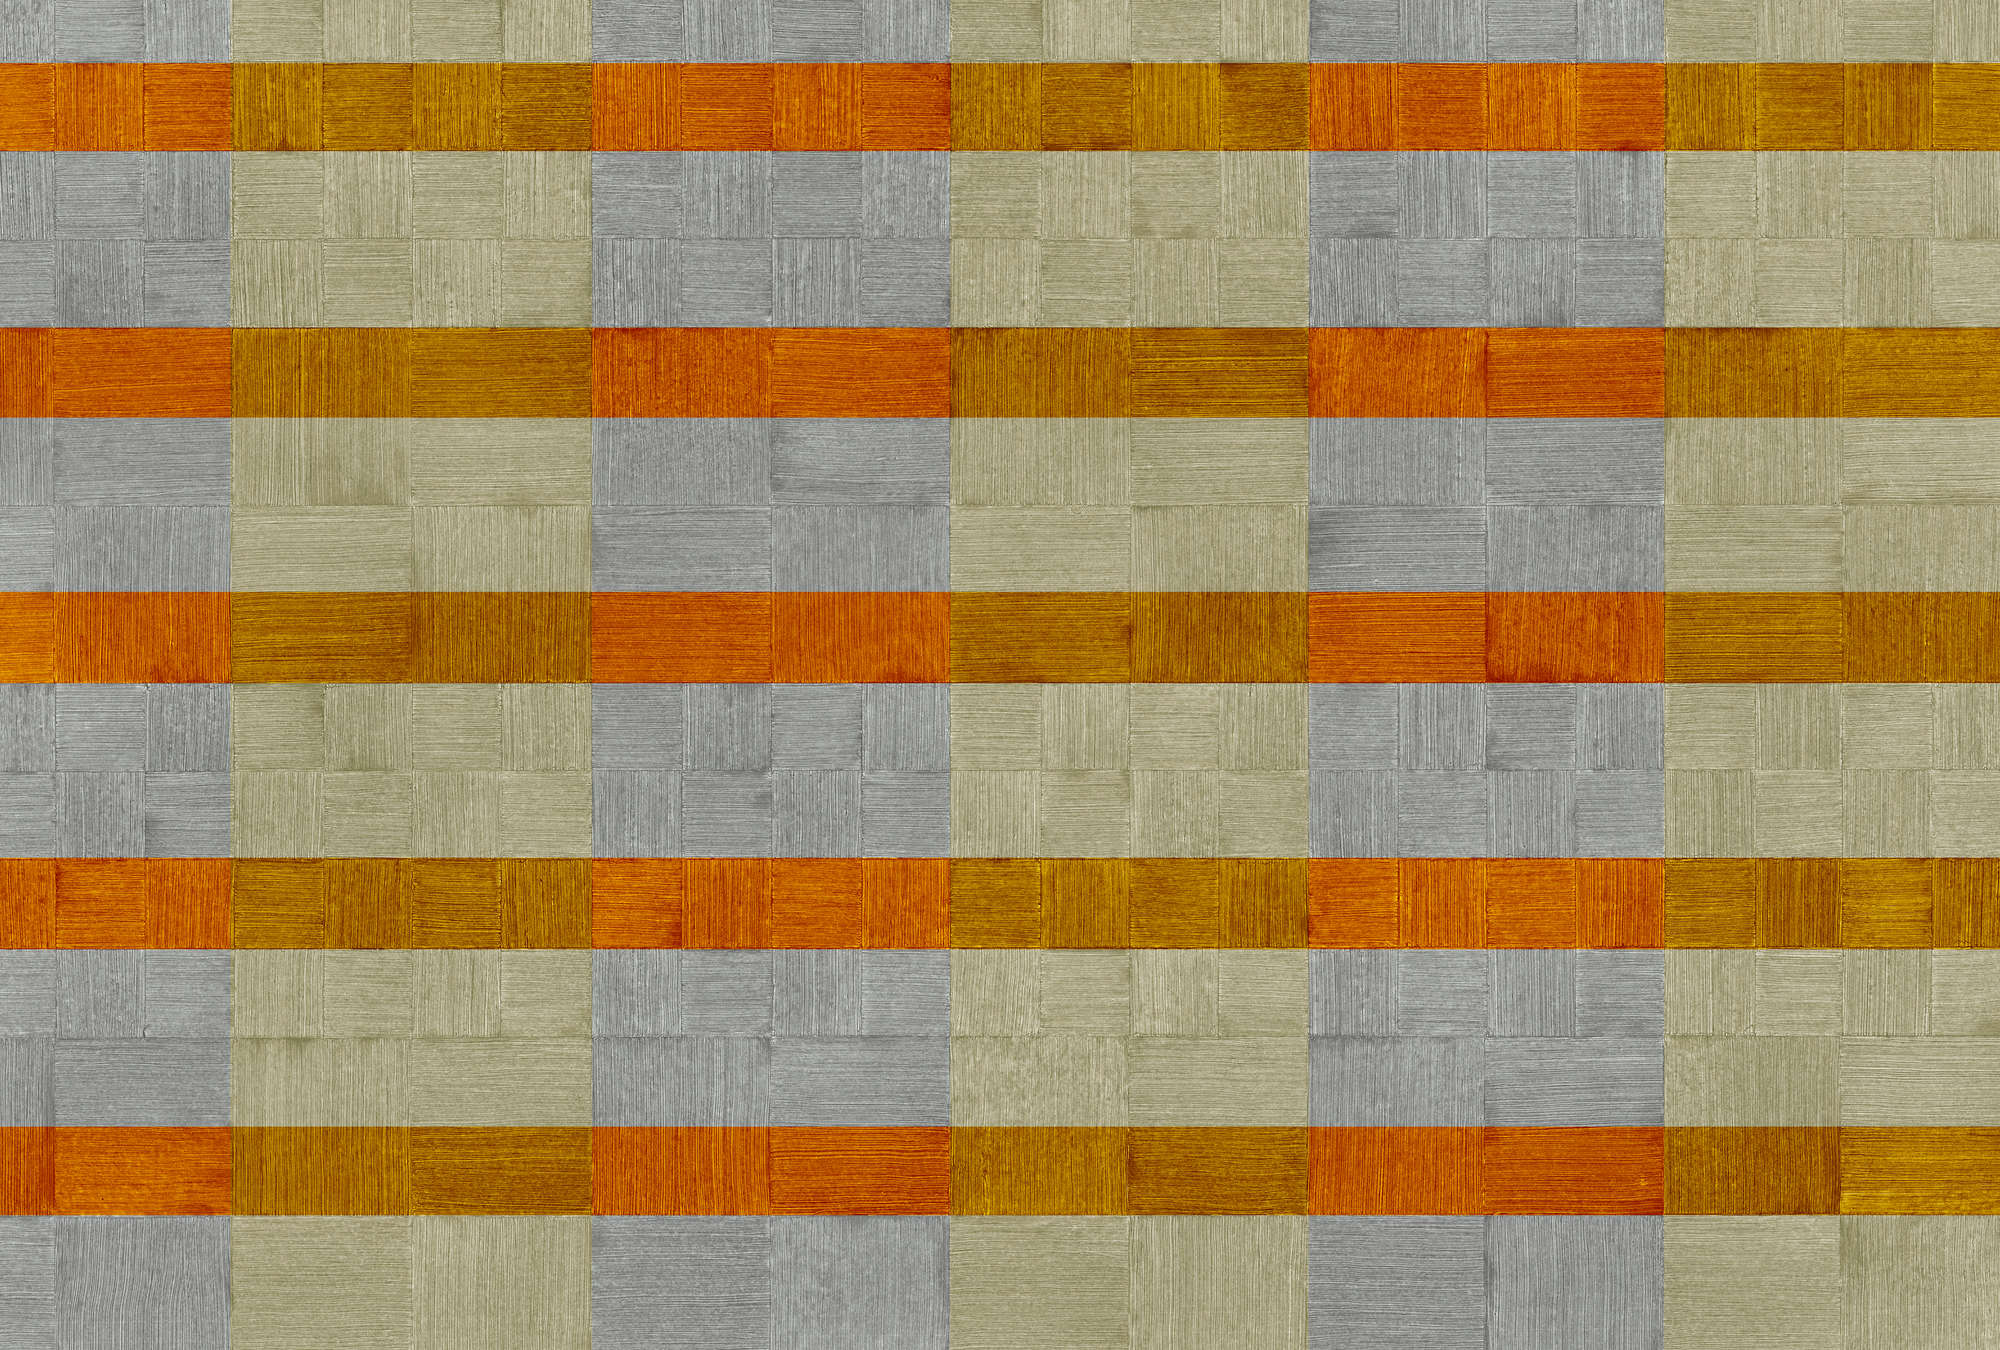             Stripes & Checkered Textured Design Behang - Grijs, Oranje, Bruin
        